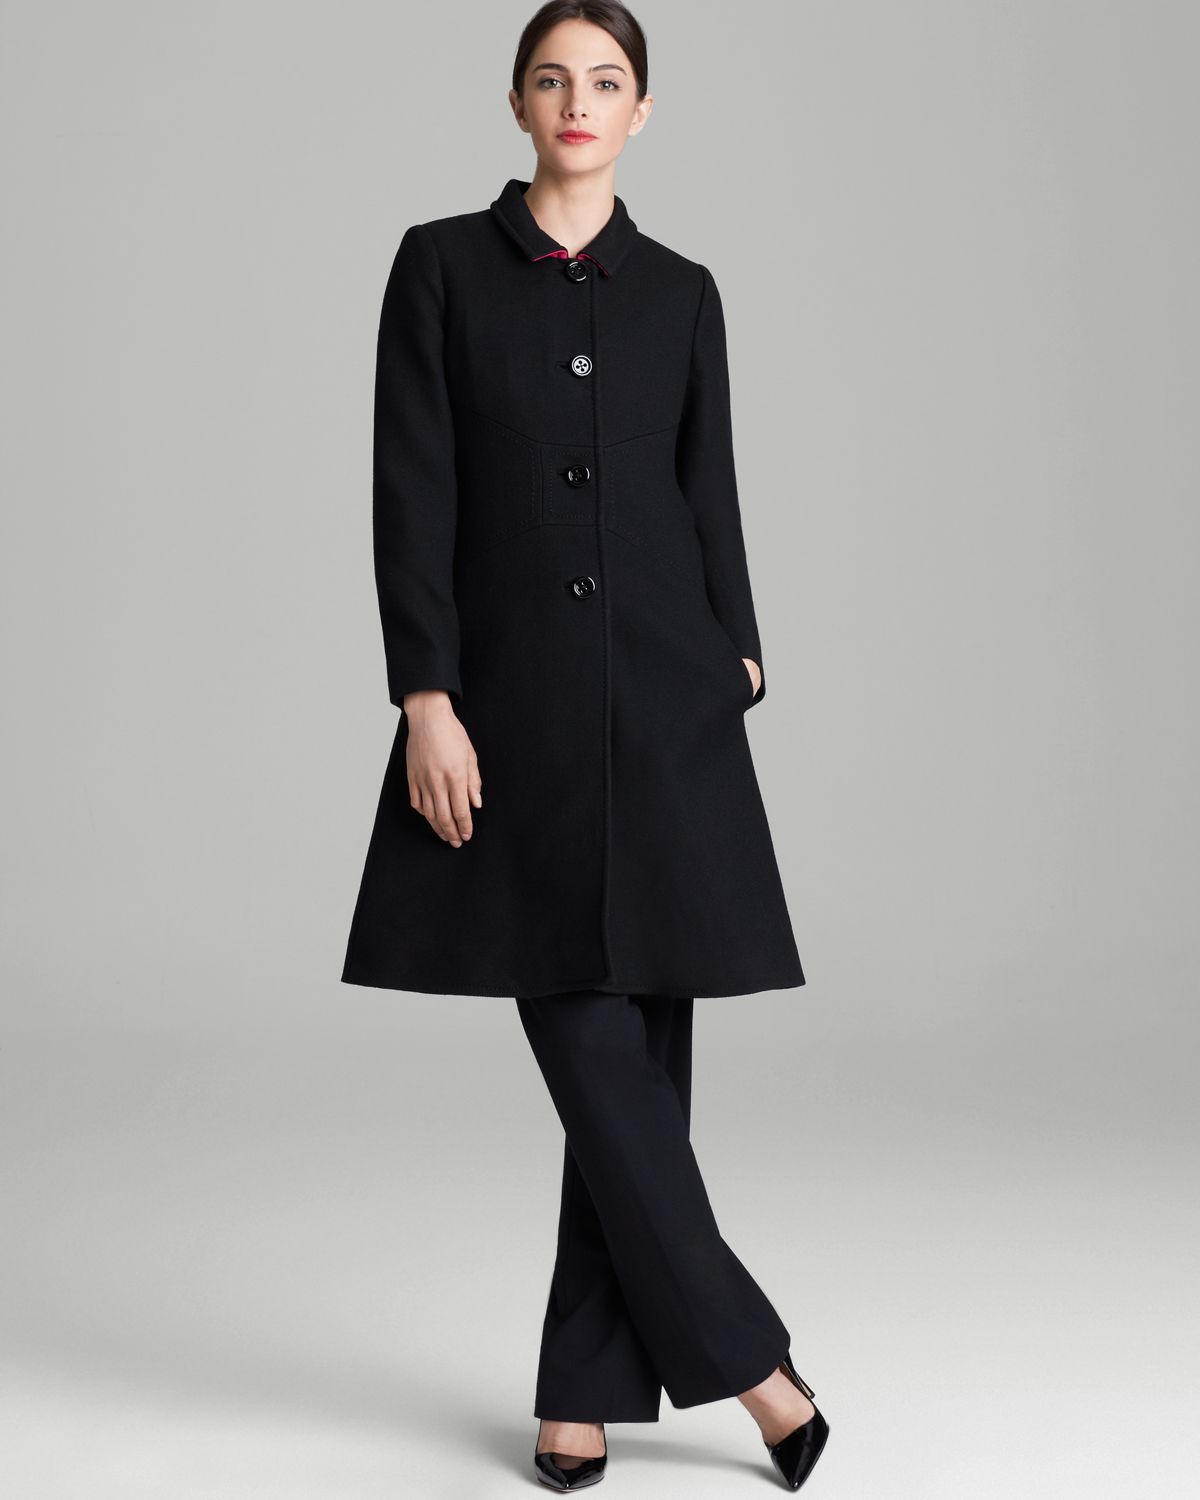 Lyst - Kate Spade New York Tiera Coat in Black